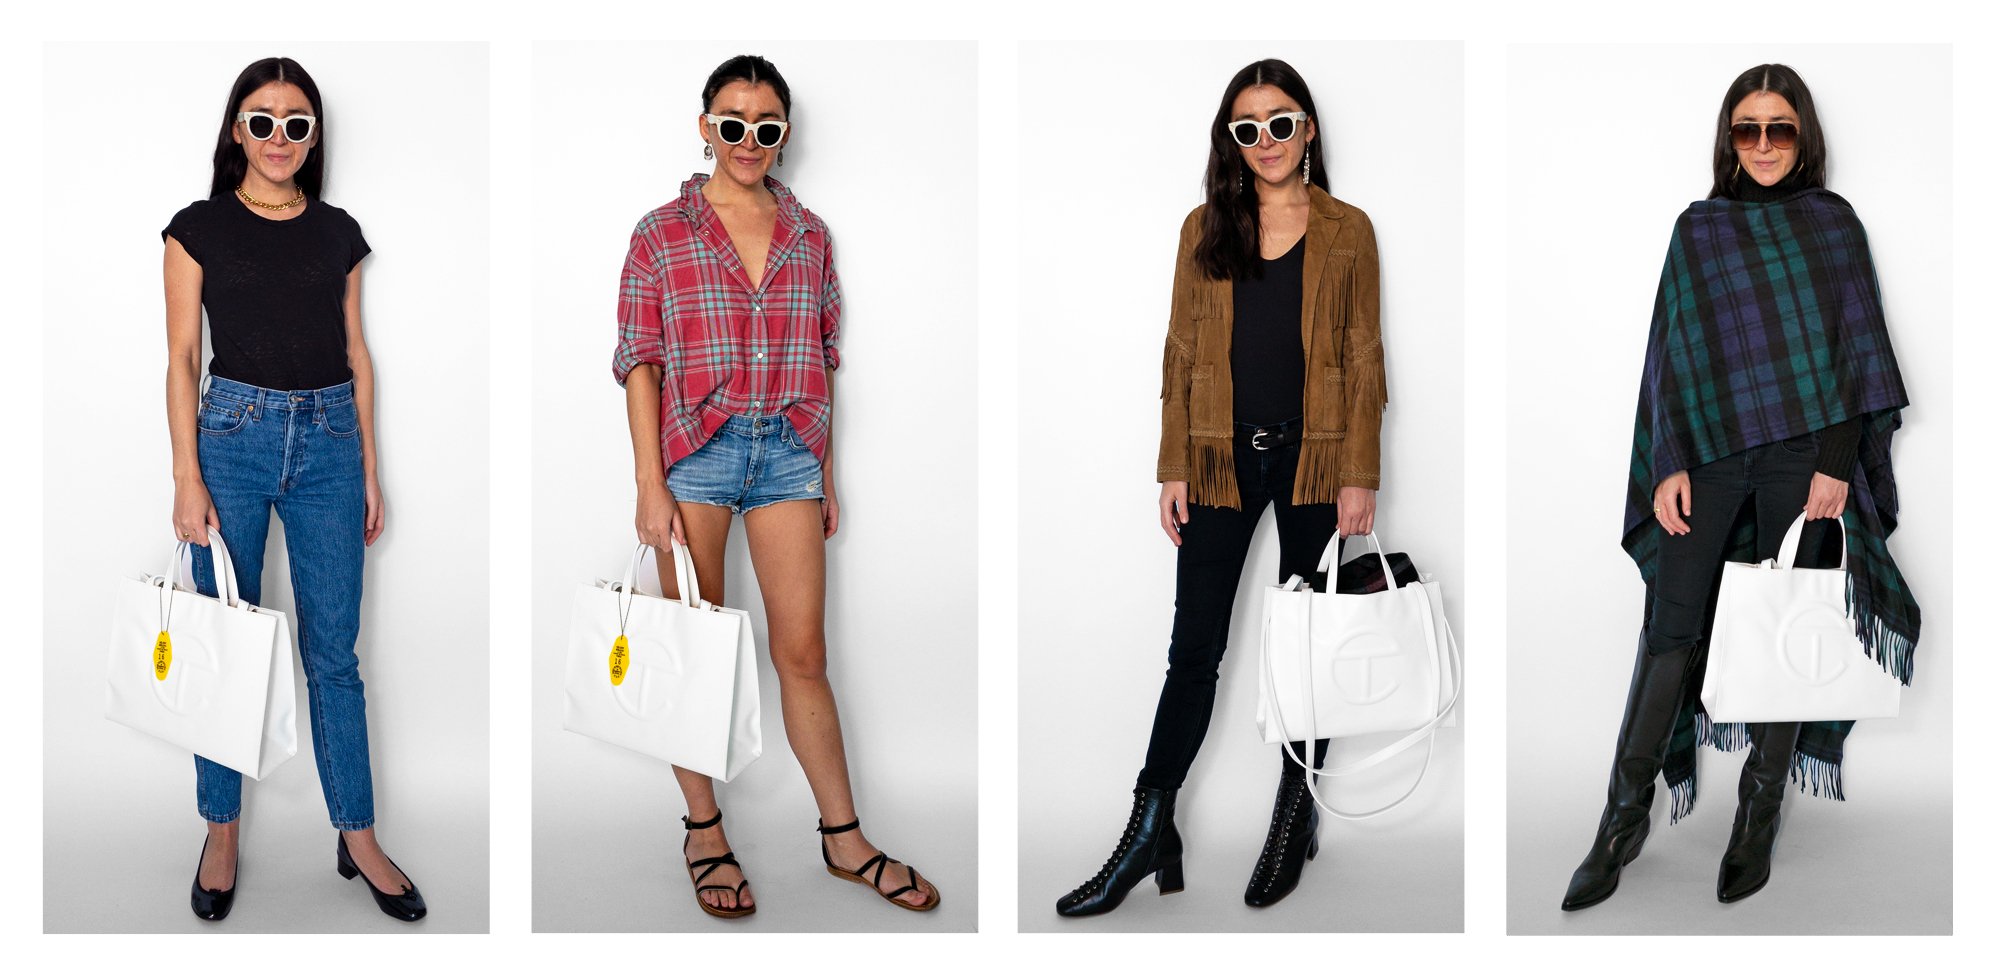 Telfar Medium Navy Shopping Bag REVIEW – How to Style 3 Ways